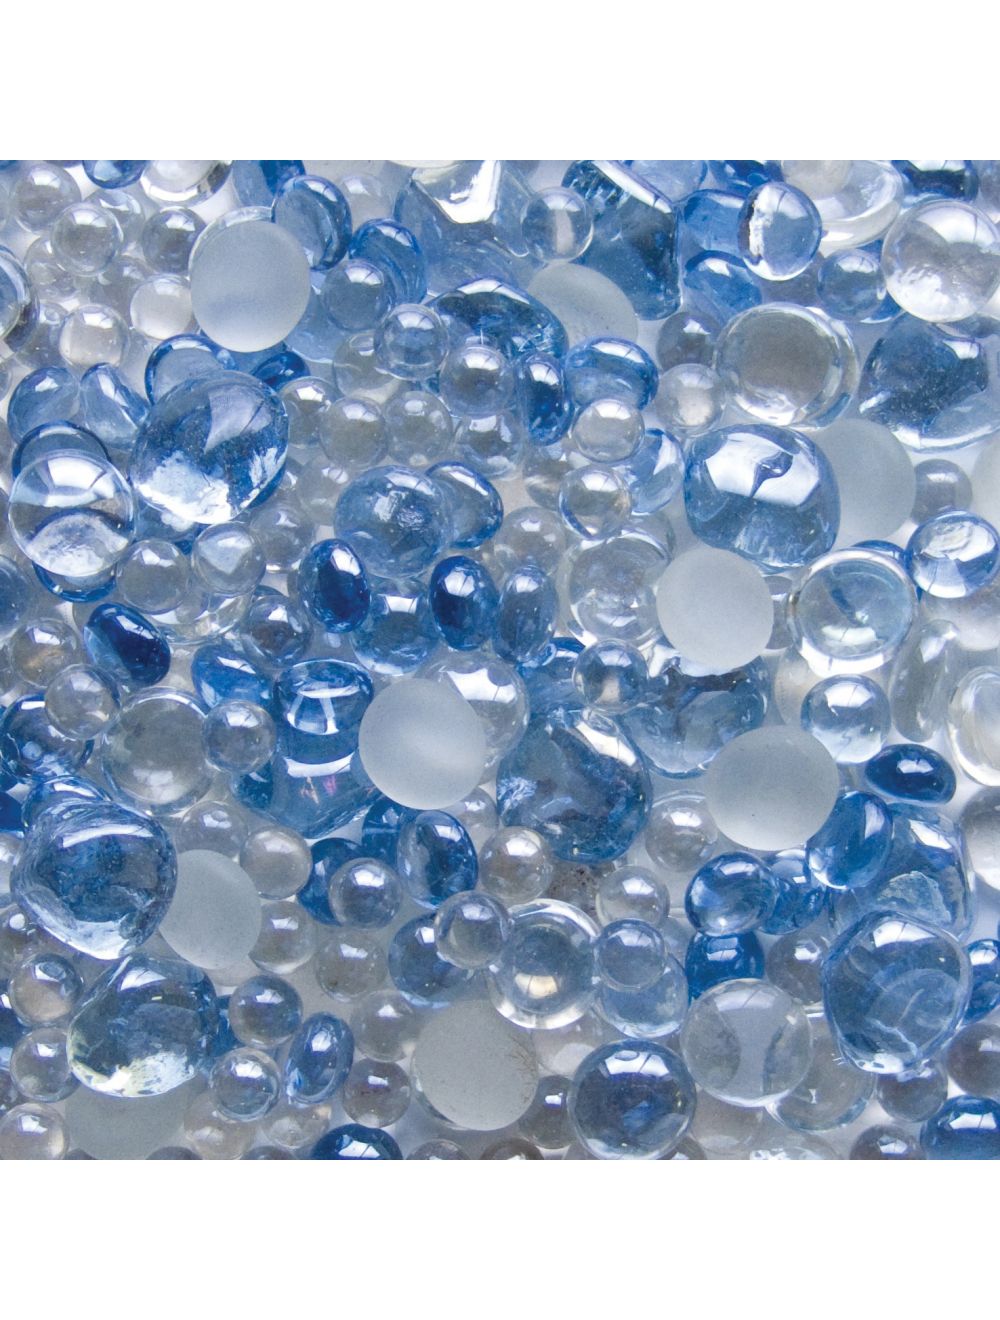 Panacea Decorative Glass Gems, Sky Blue Lustre, 10.5 lbs. at